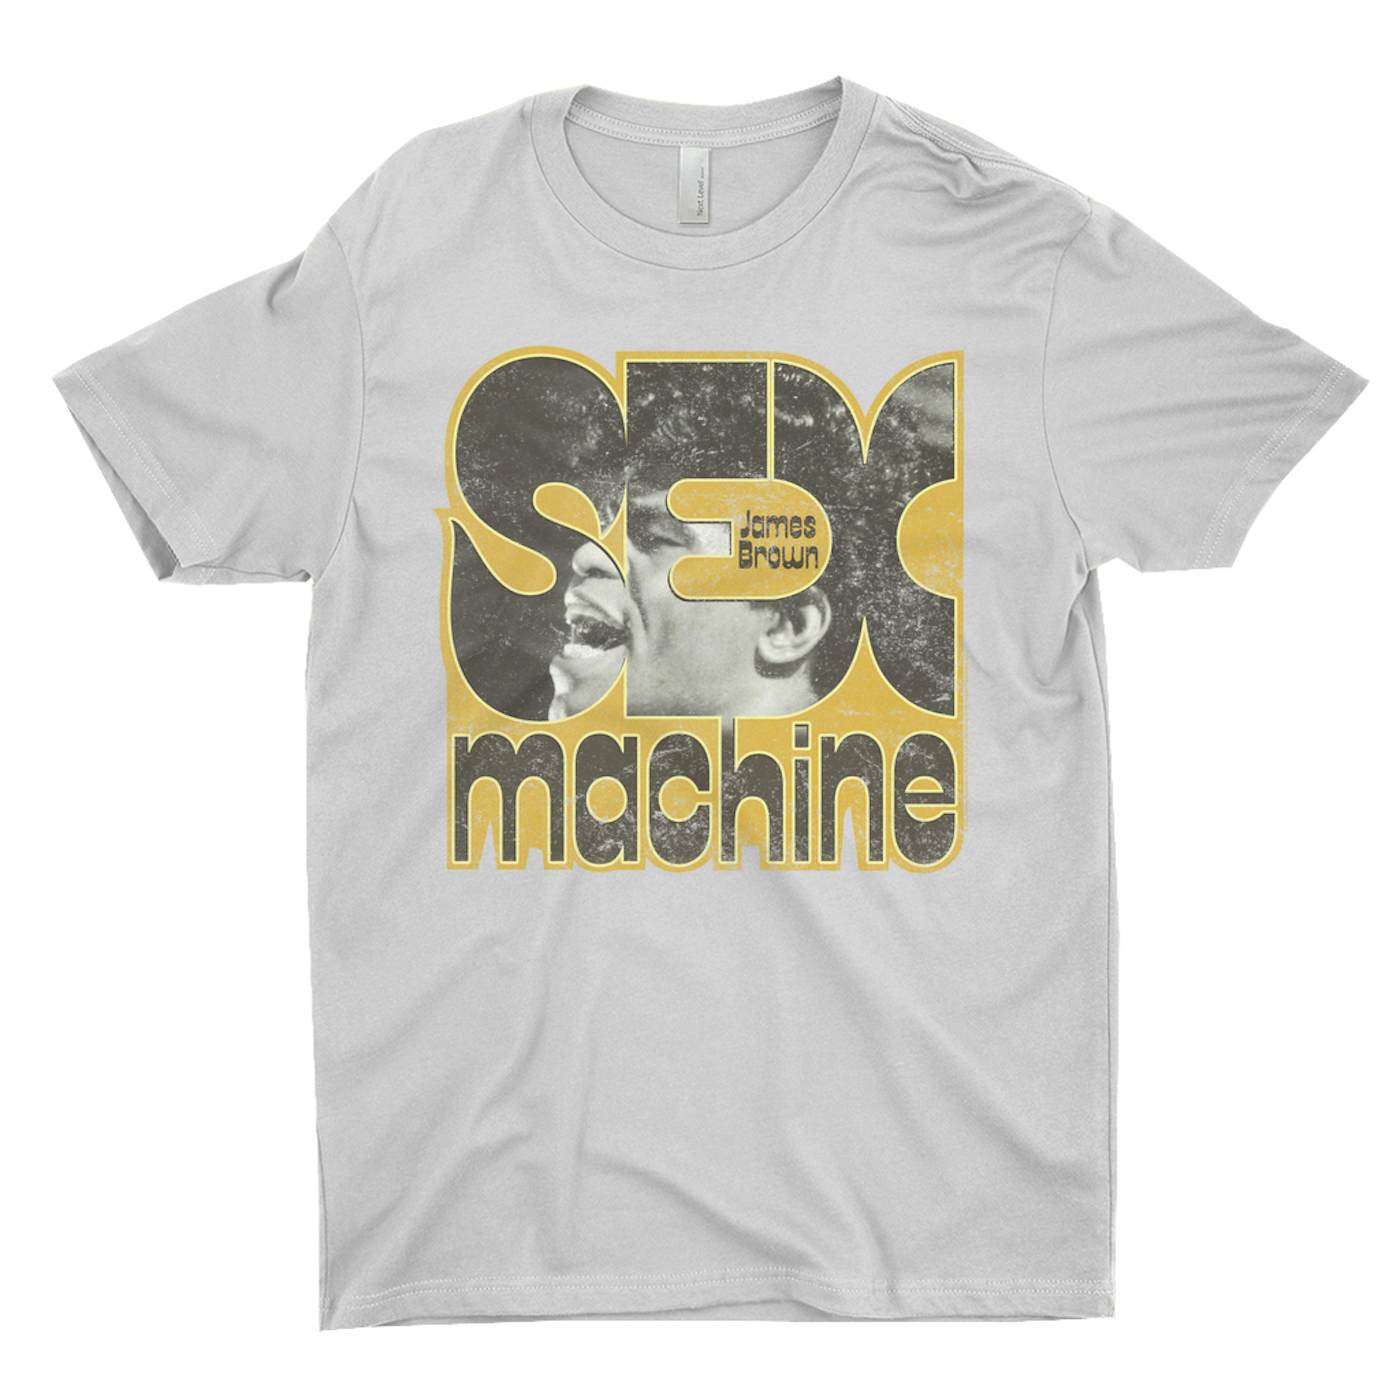 James Brown T-Shirt | Sex Machine In Yellow Design James Brown Shirt